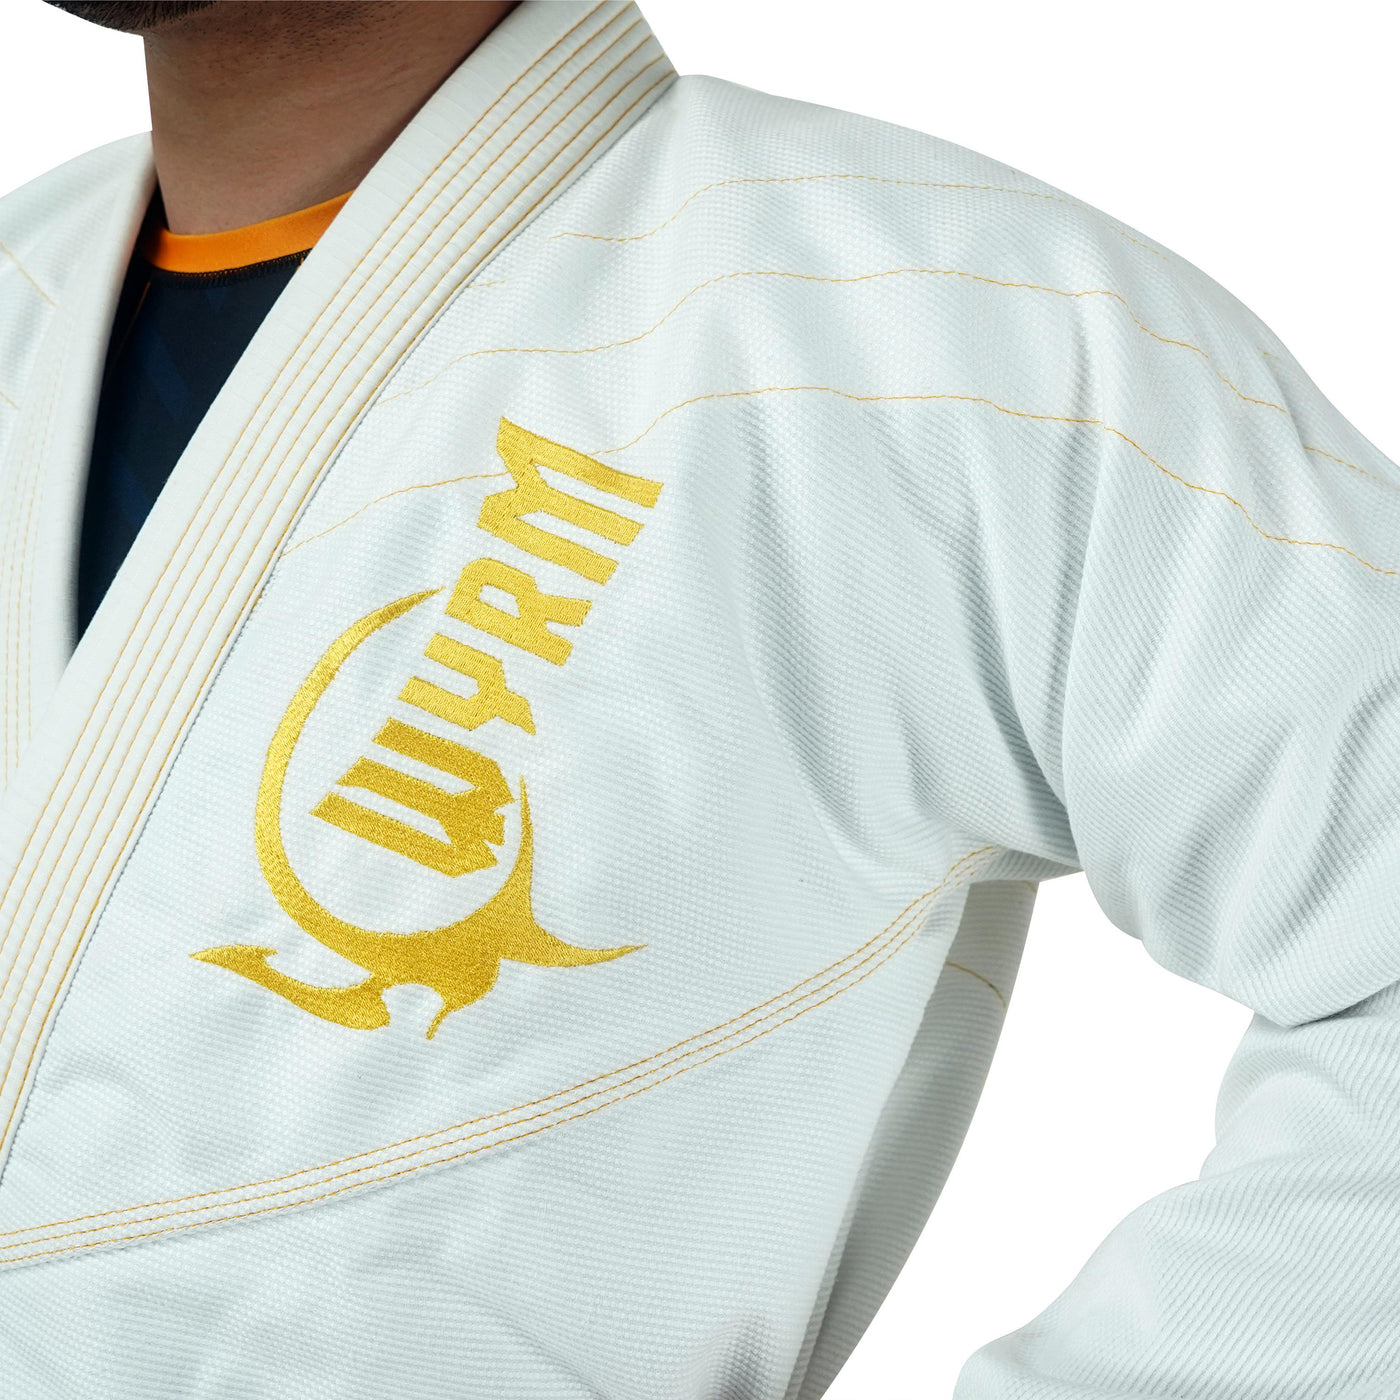 Canelo White/Gold Sublimation Brazilian Jiu Jitsu Gi